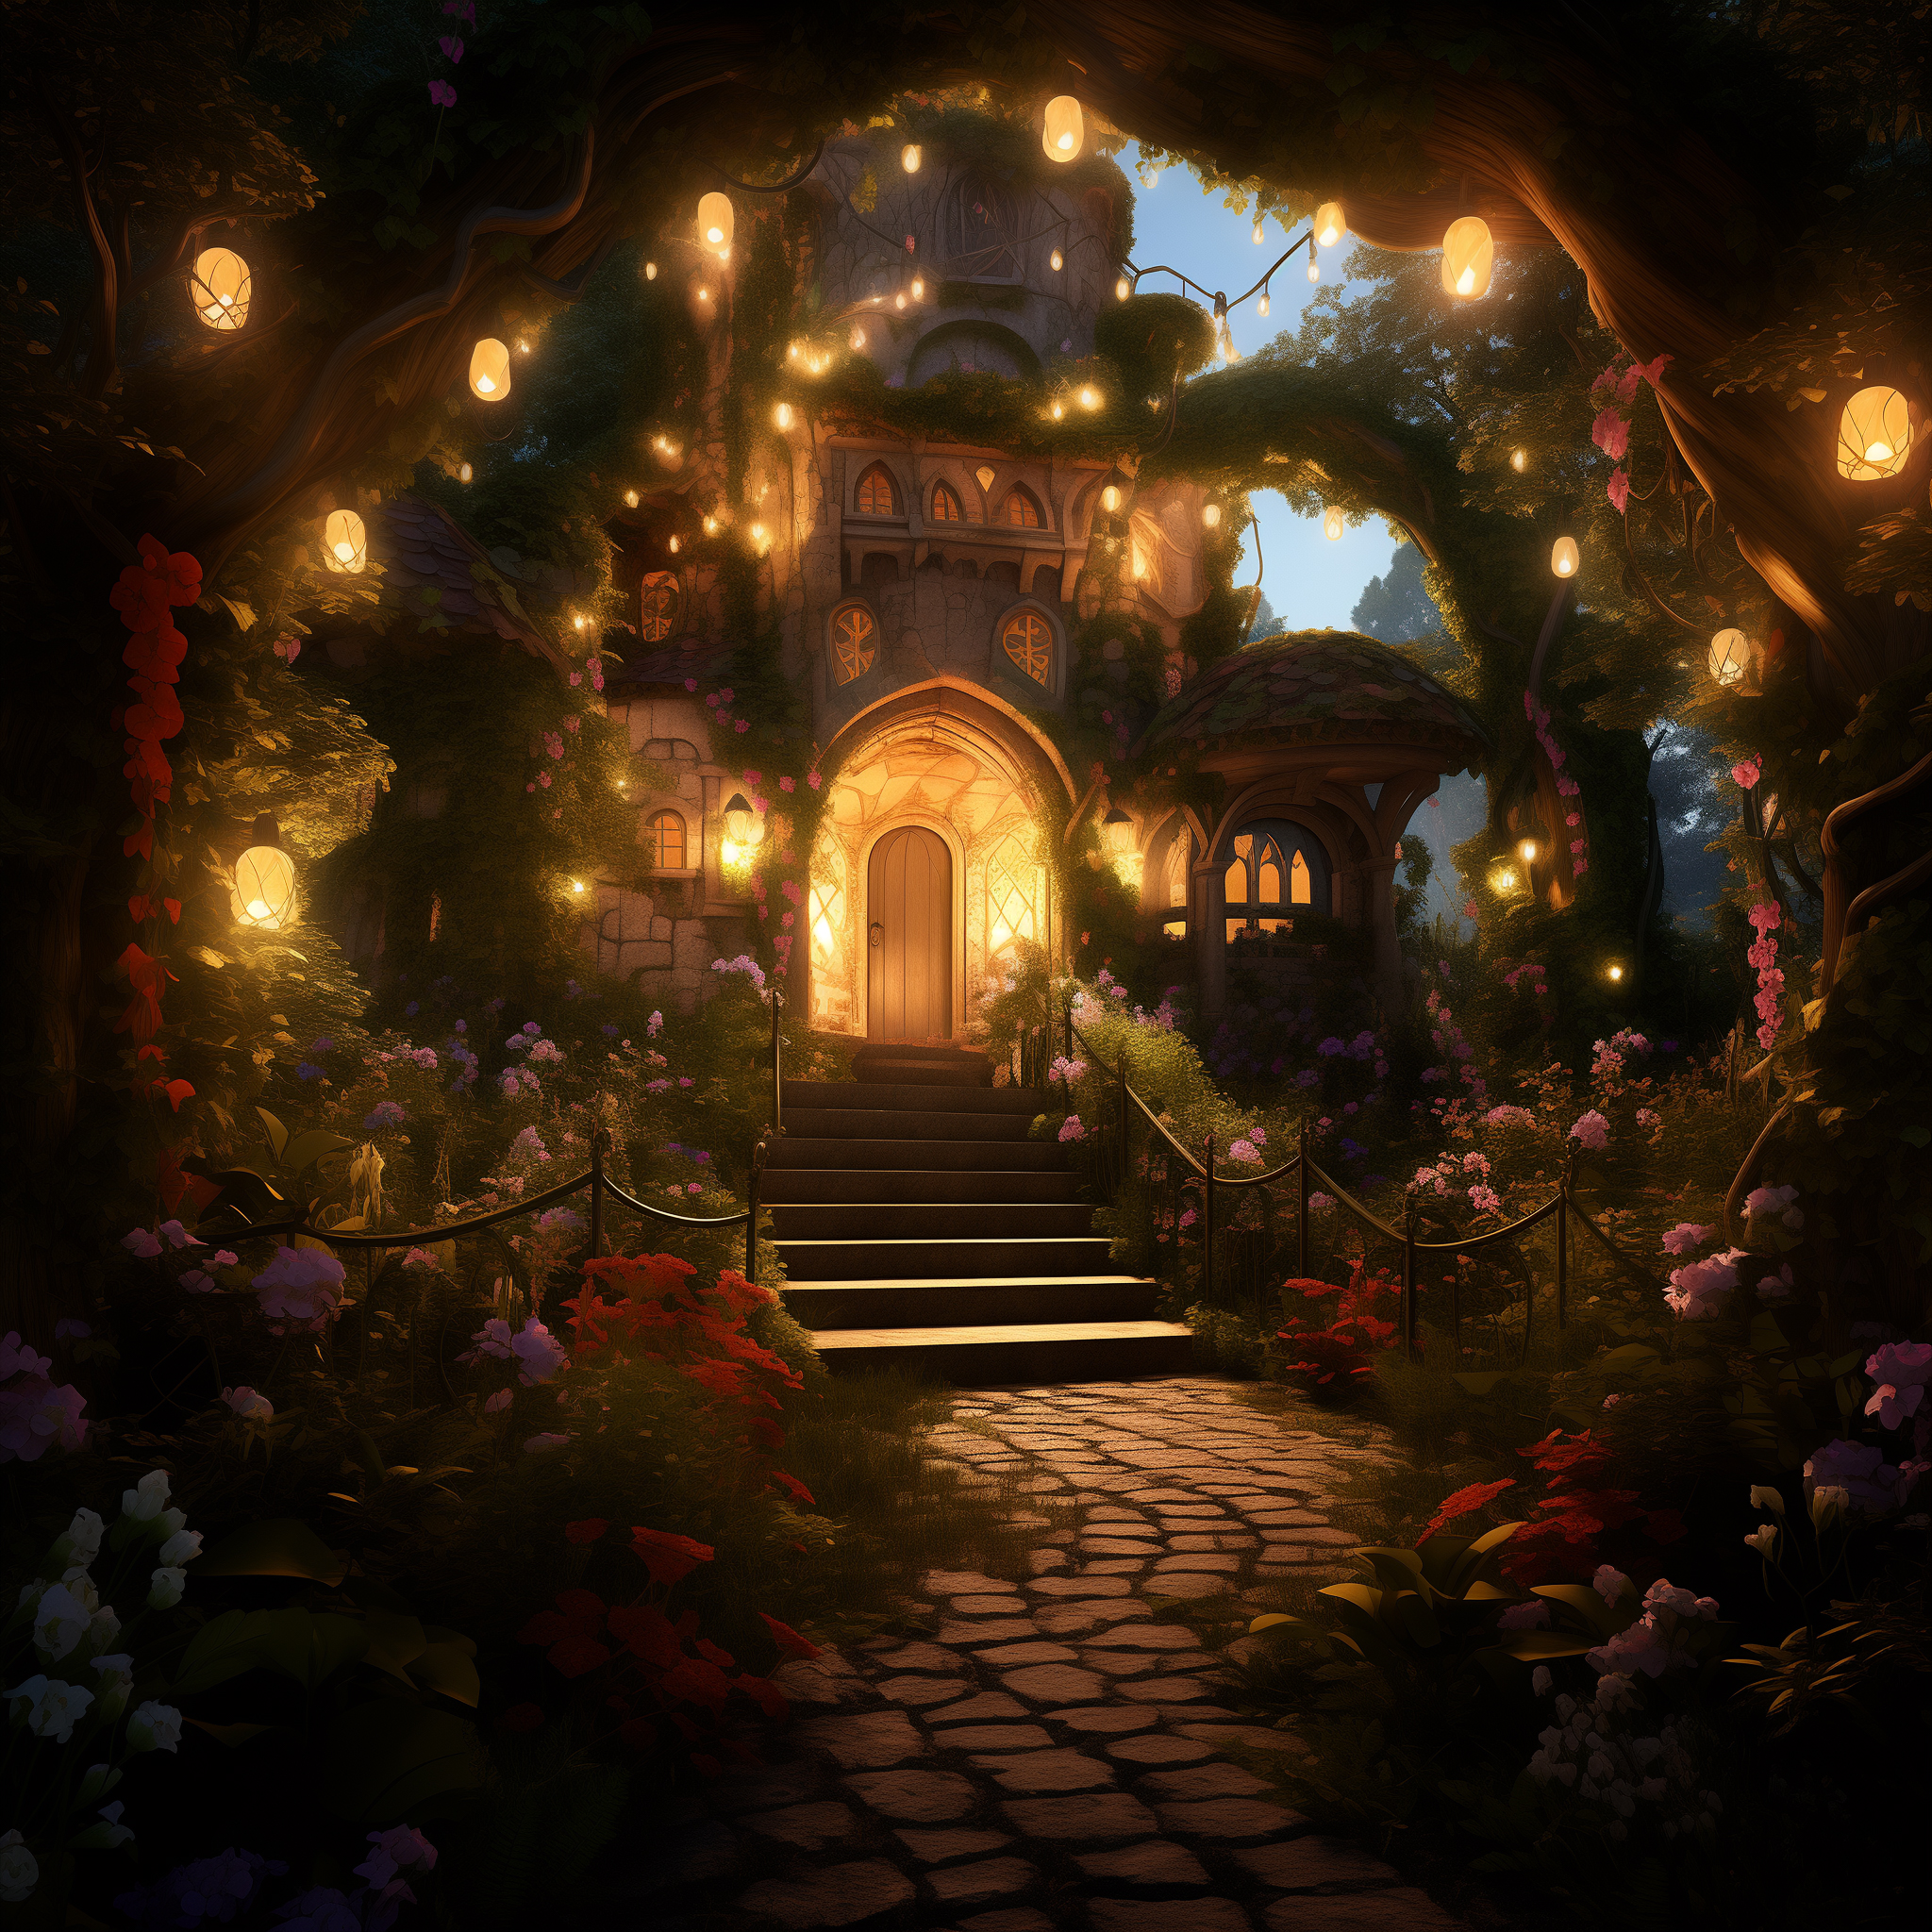 General 2048x2048 AI art digital art digital painting garden magical garden magic stairs flowers lights path window house